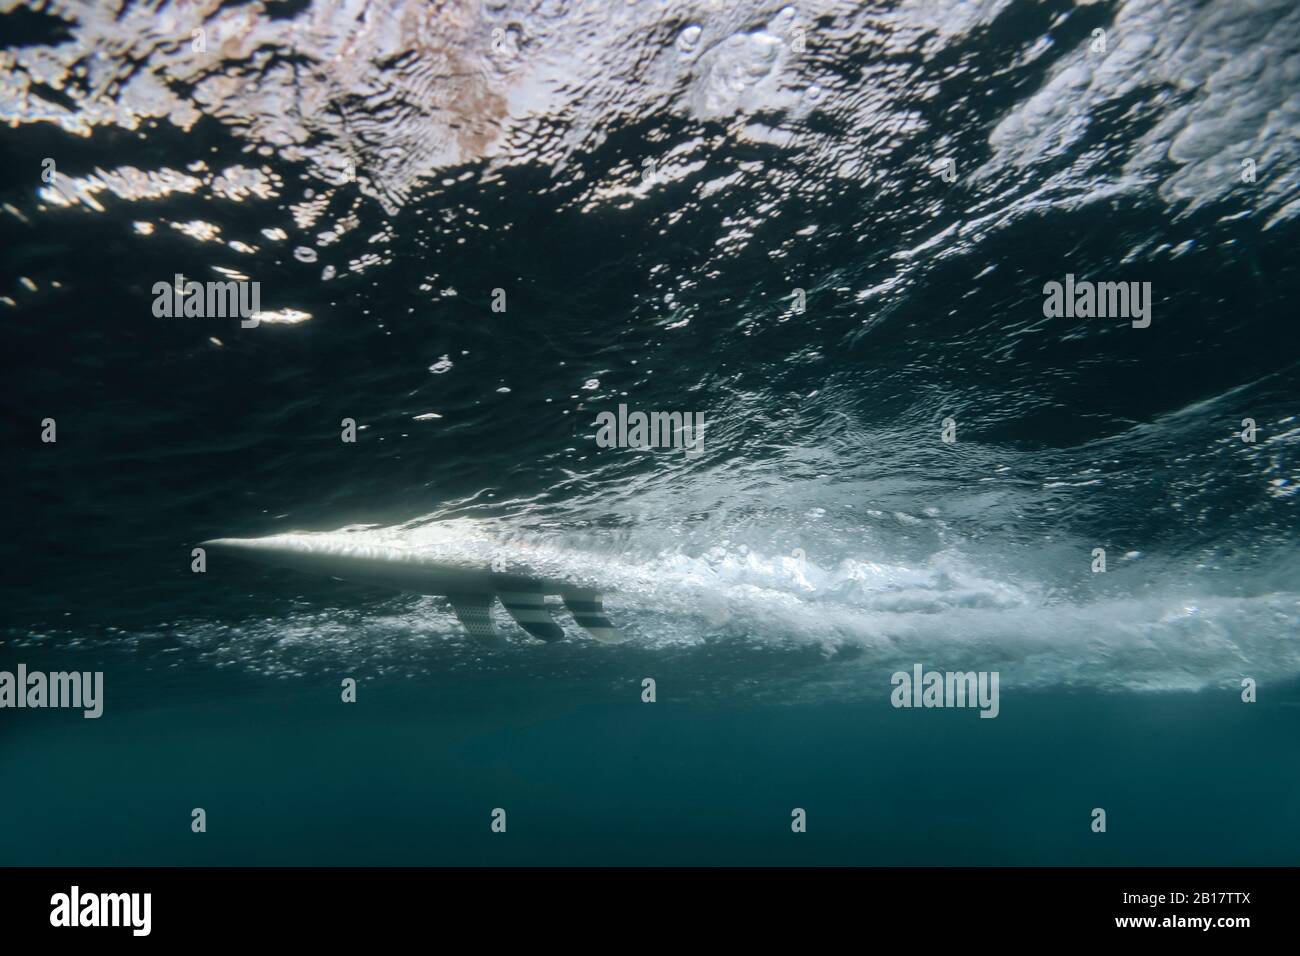 Sea ï¼ ocean wave stock photo. Image of wave, detail - 37515254